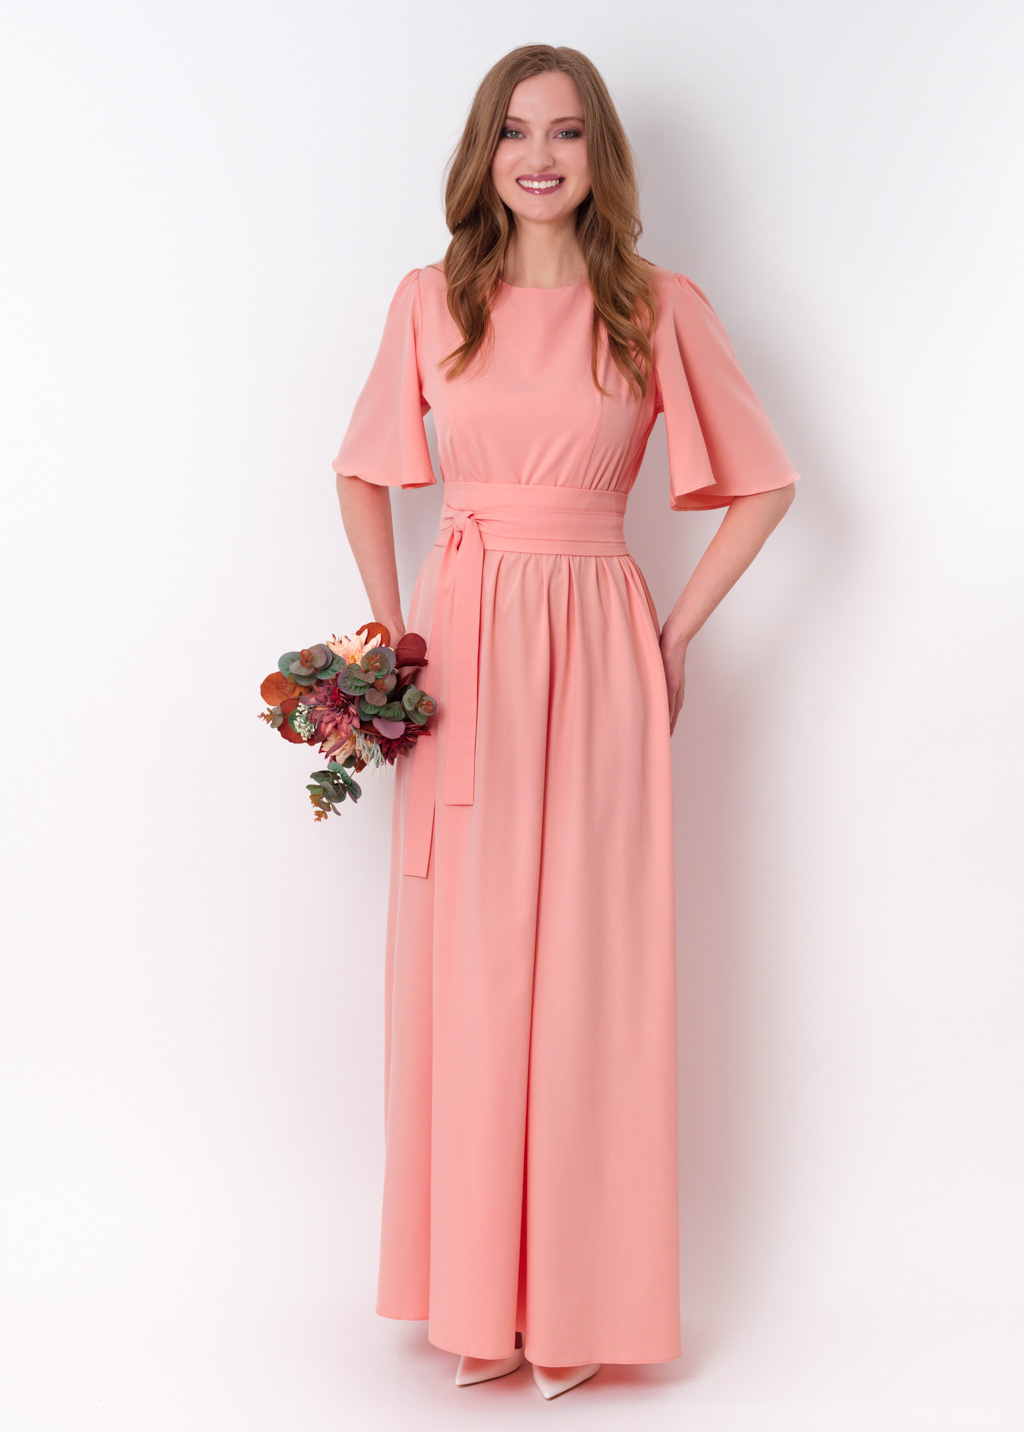 Blush pink long dress with belt